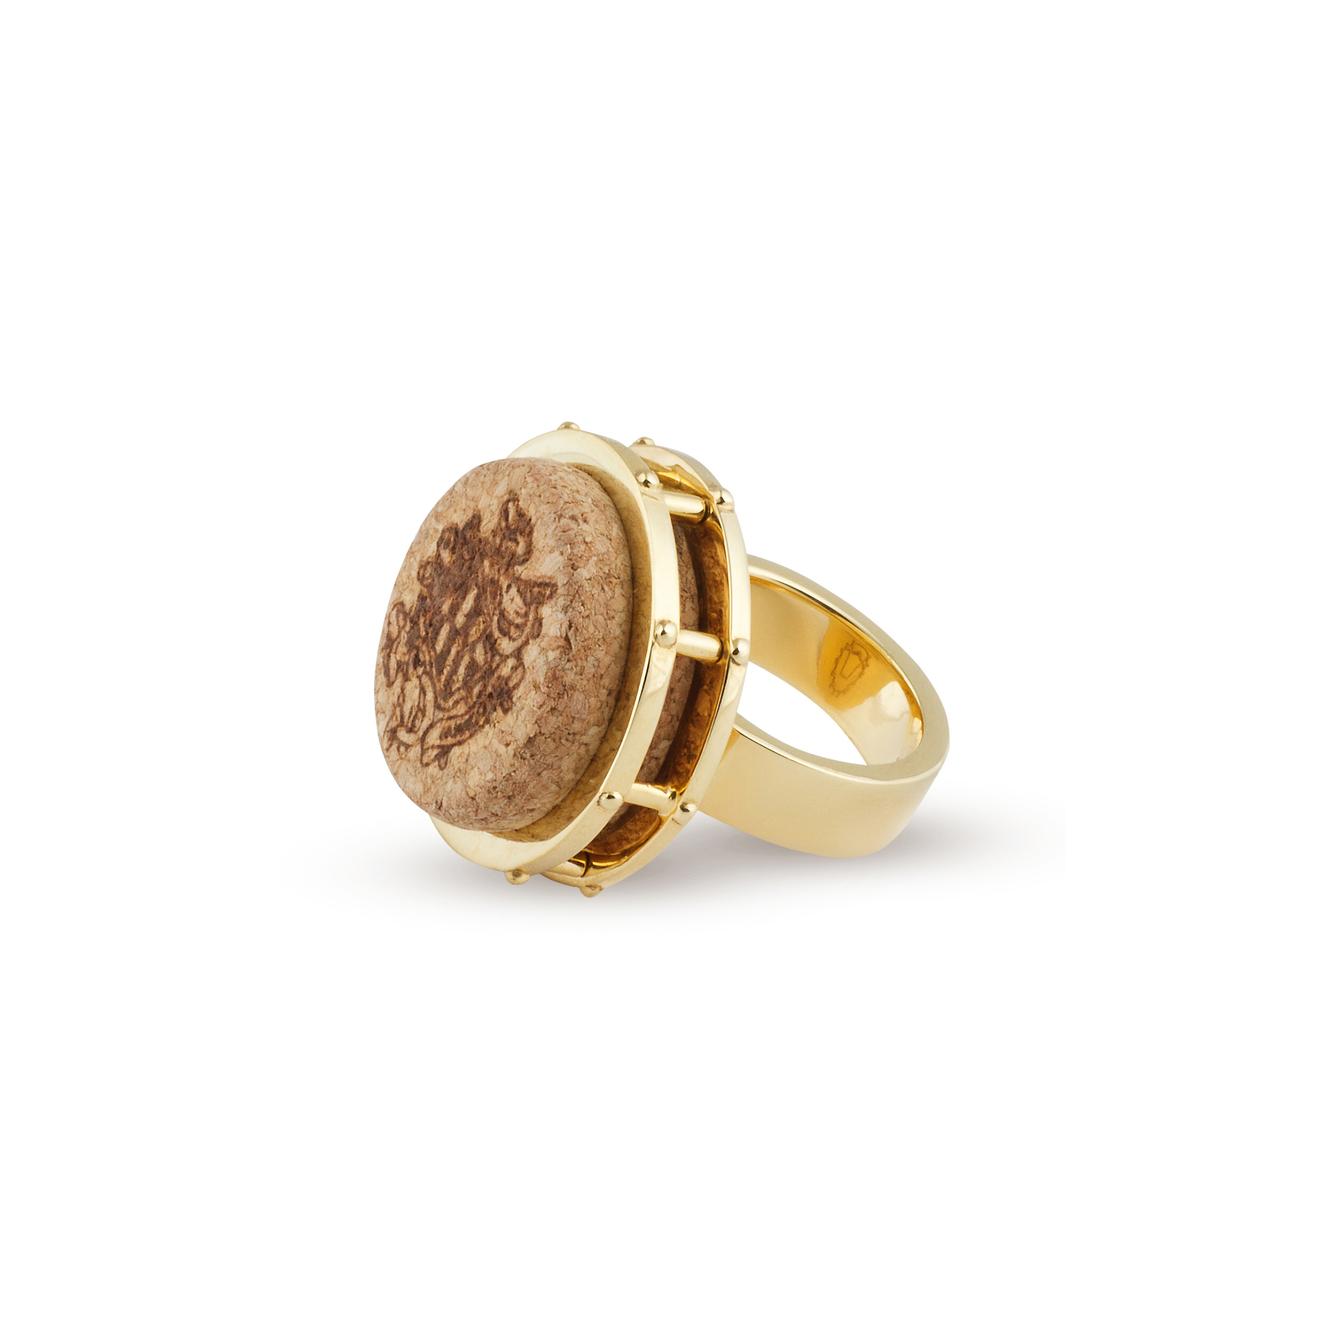 AMARIN Jewelry Позолоченное кольцо CORK из бронзы Бочка amarin jewelry позолоченная подвеска cork бочка